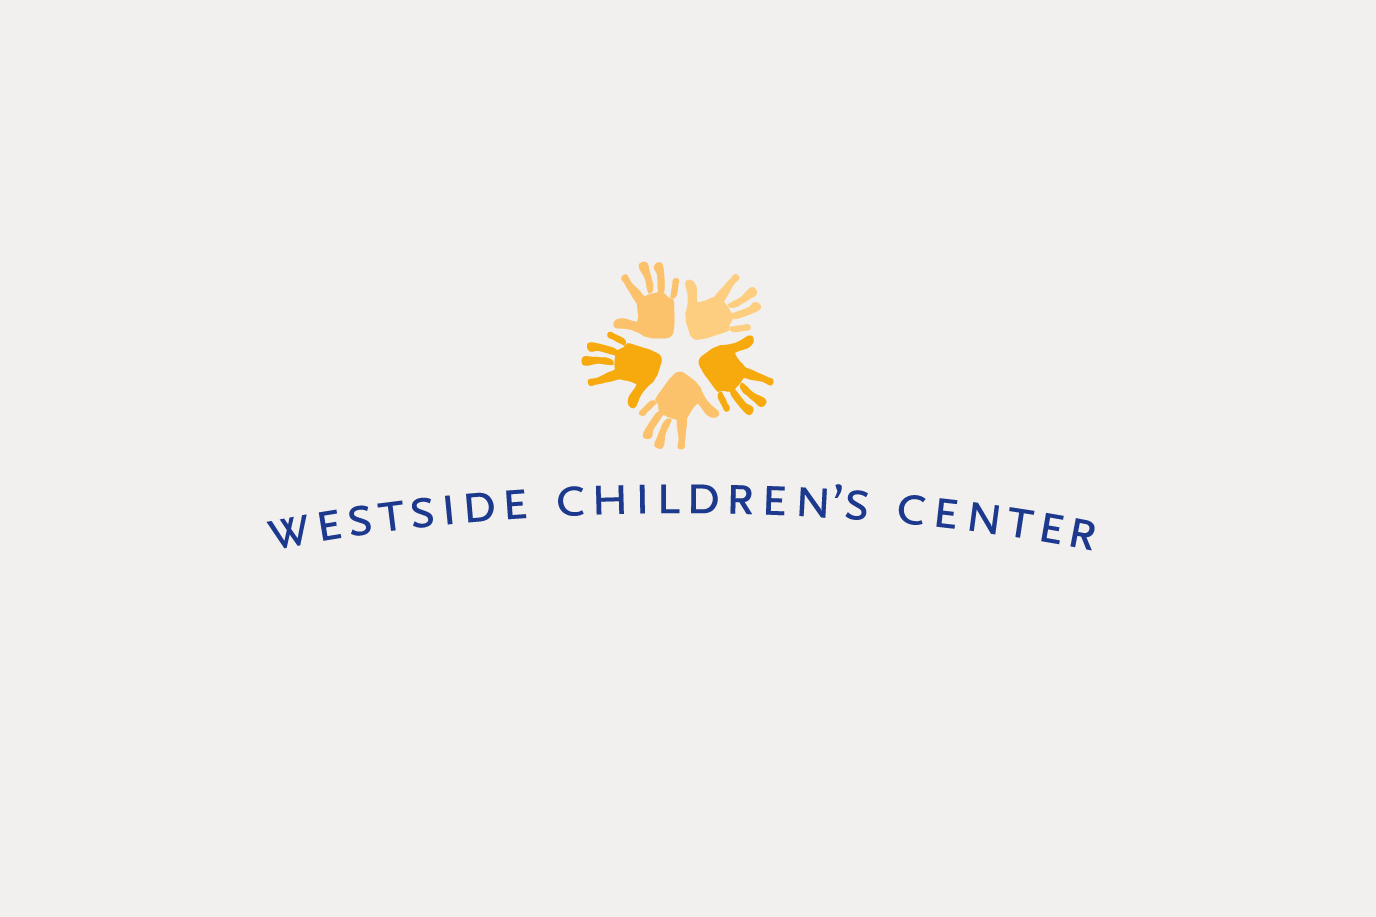 Westside Children’s Center Identity